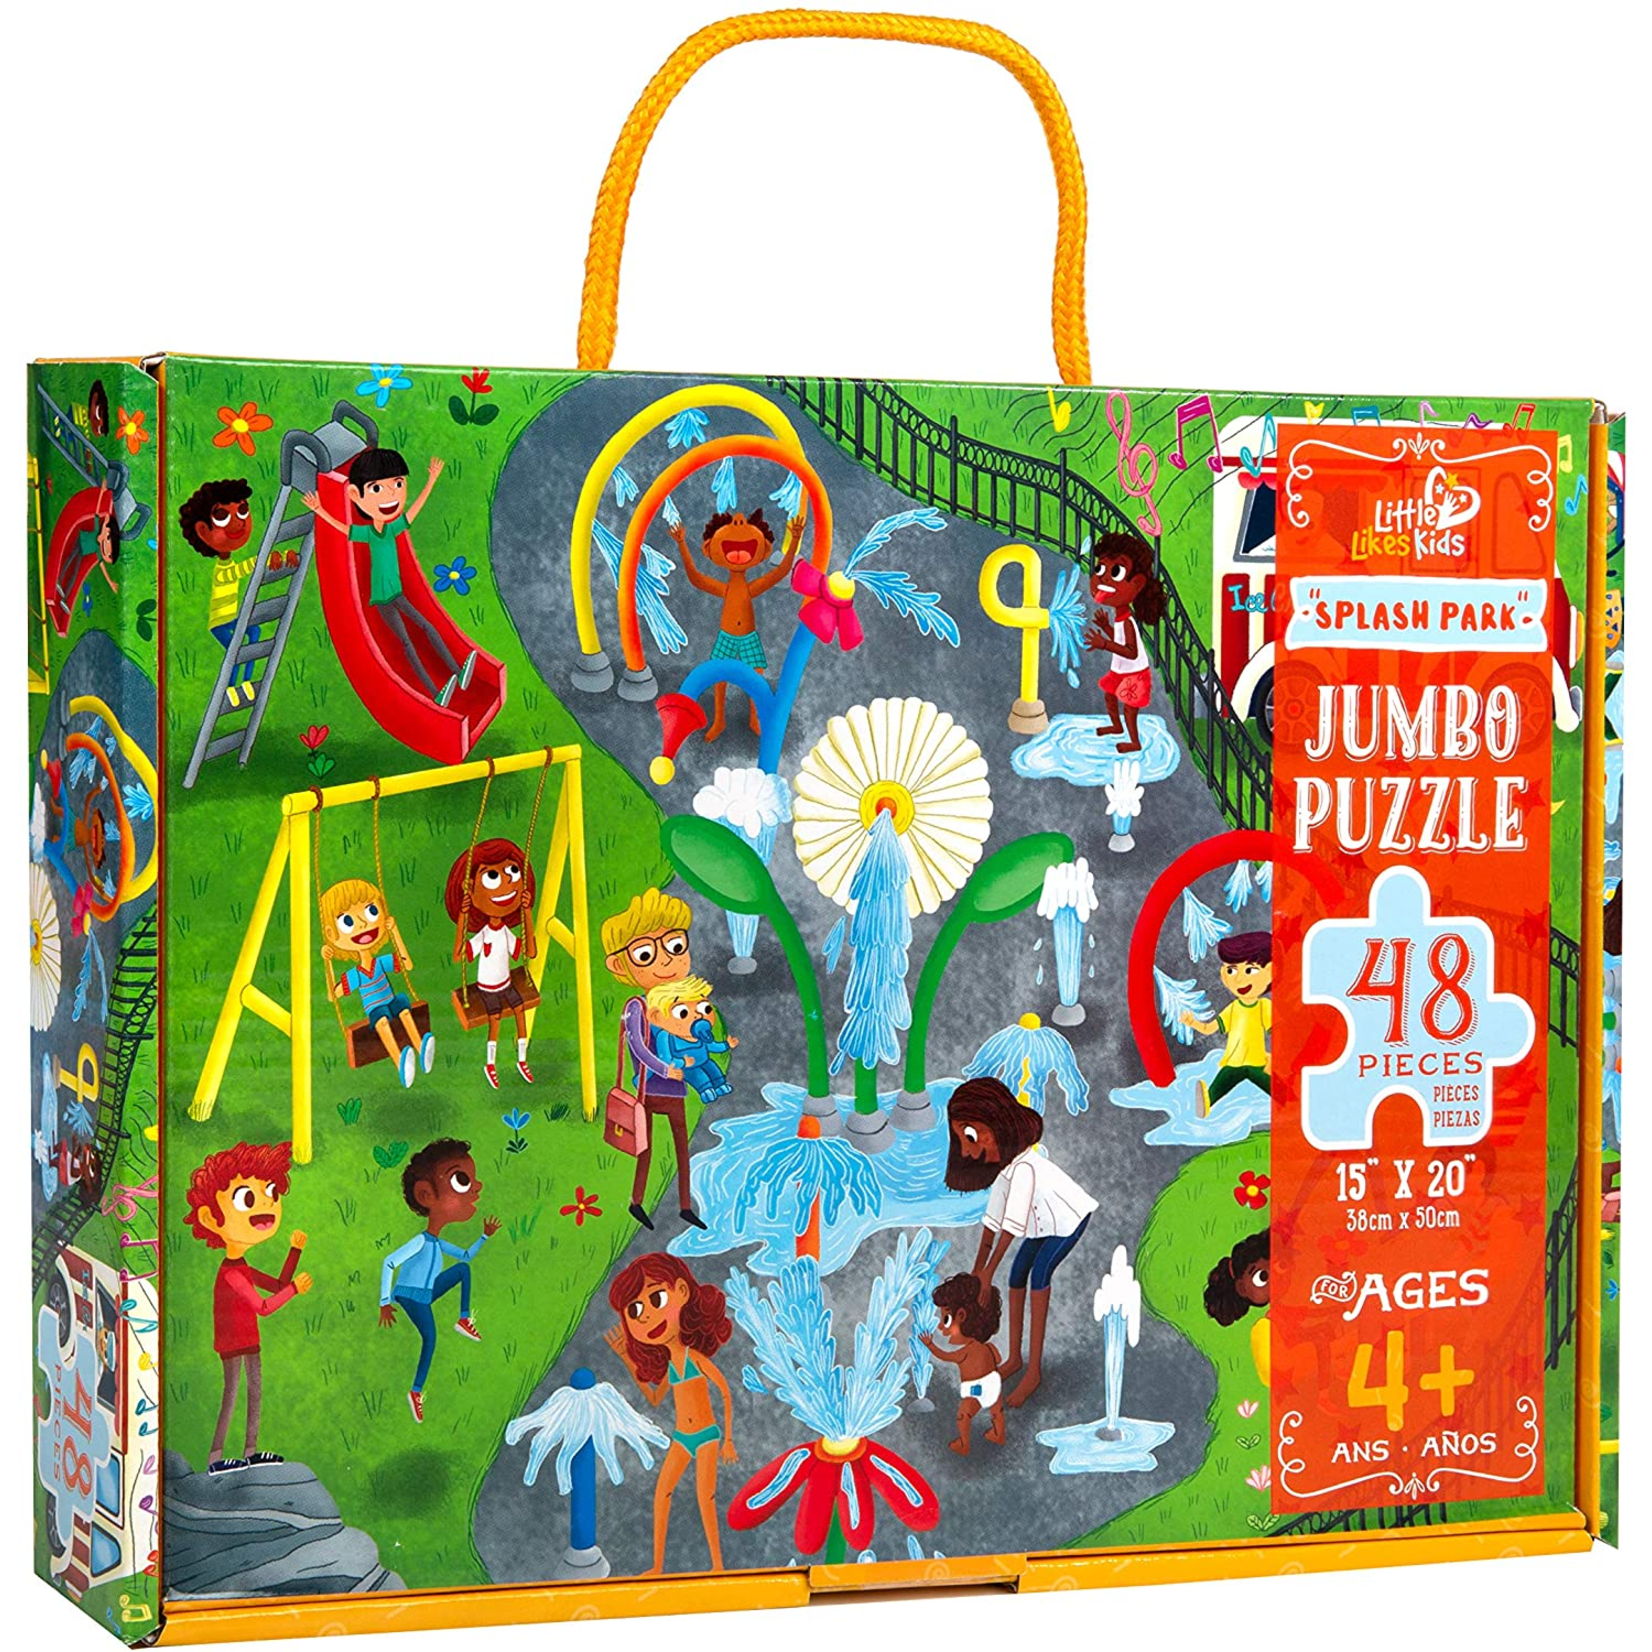 Little Likes Kids Splash Park, 48-Piece Jigsaw Puzzle (Jumbo)